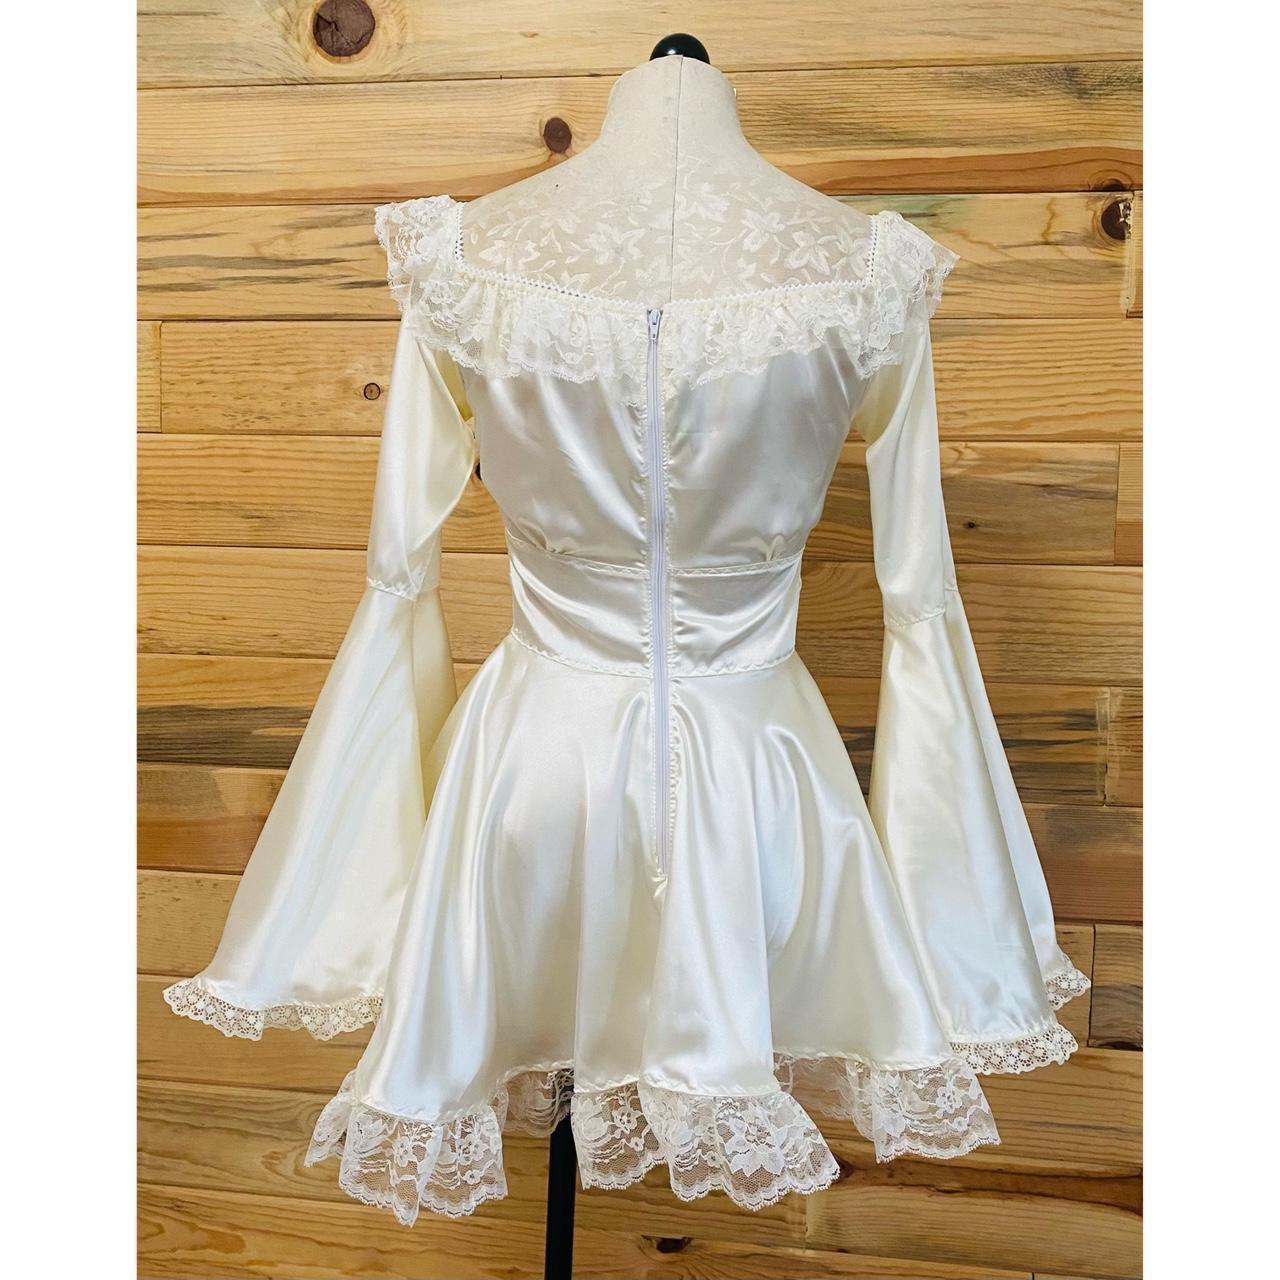 The Deidre Dress in Cream